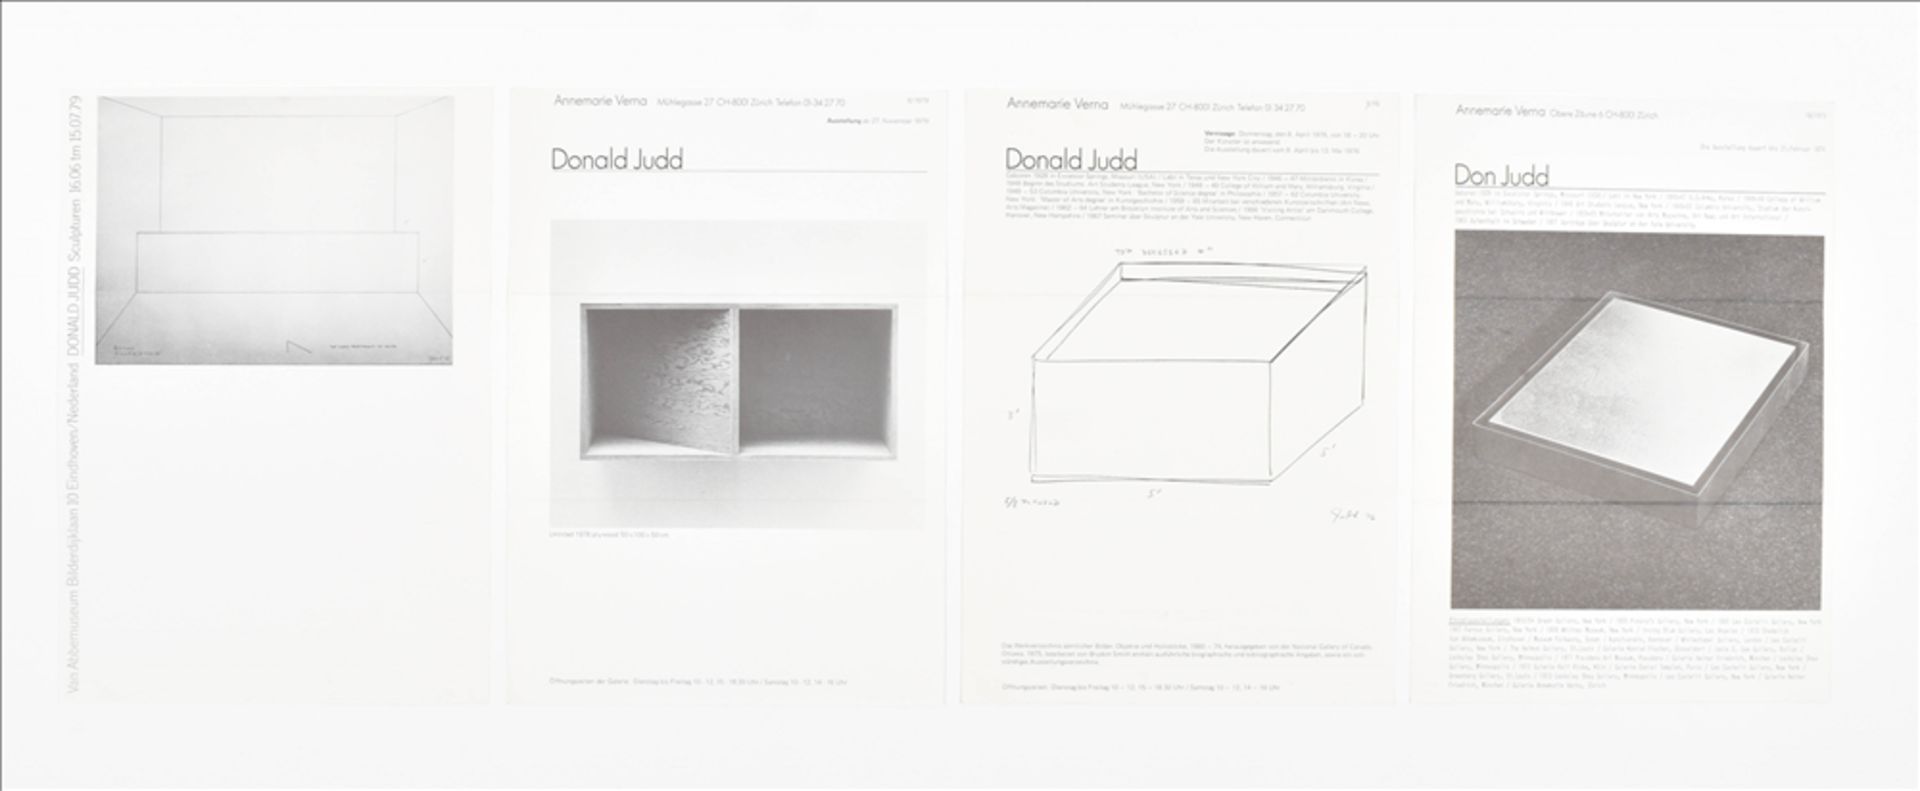 Donald Judd exhibition announcements from 1969-1979 - Bild 3 aus 8